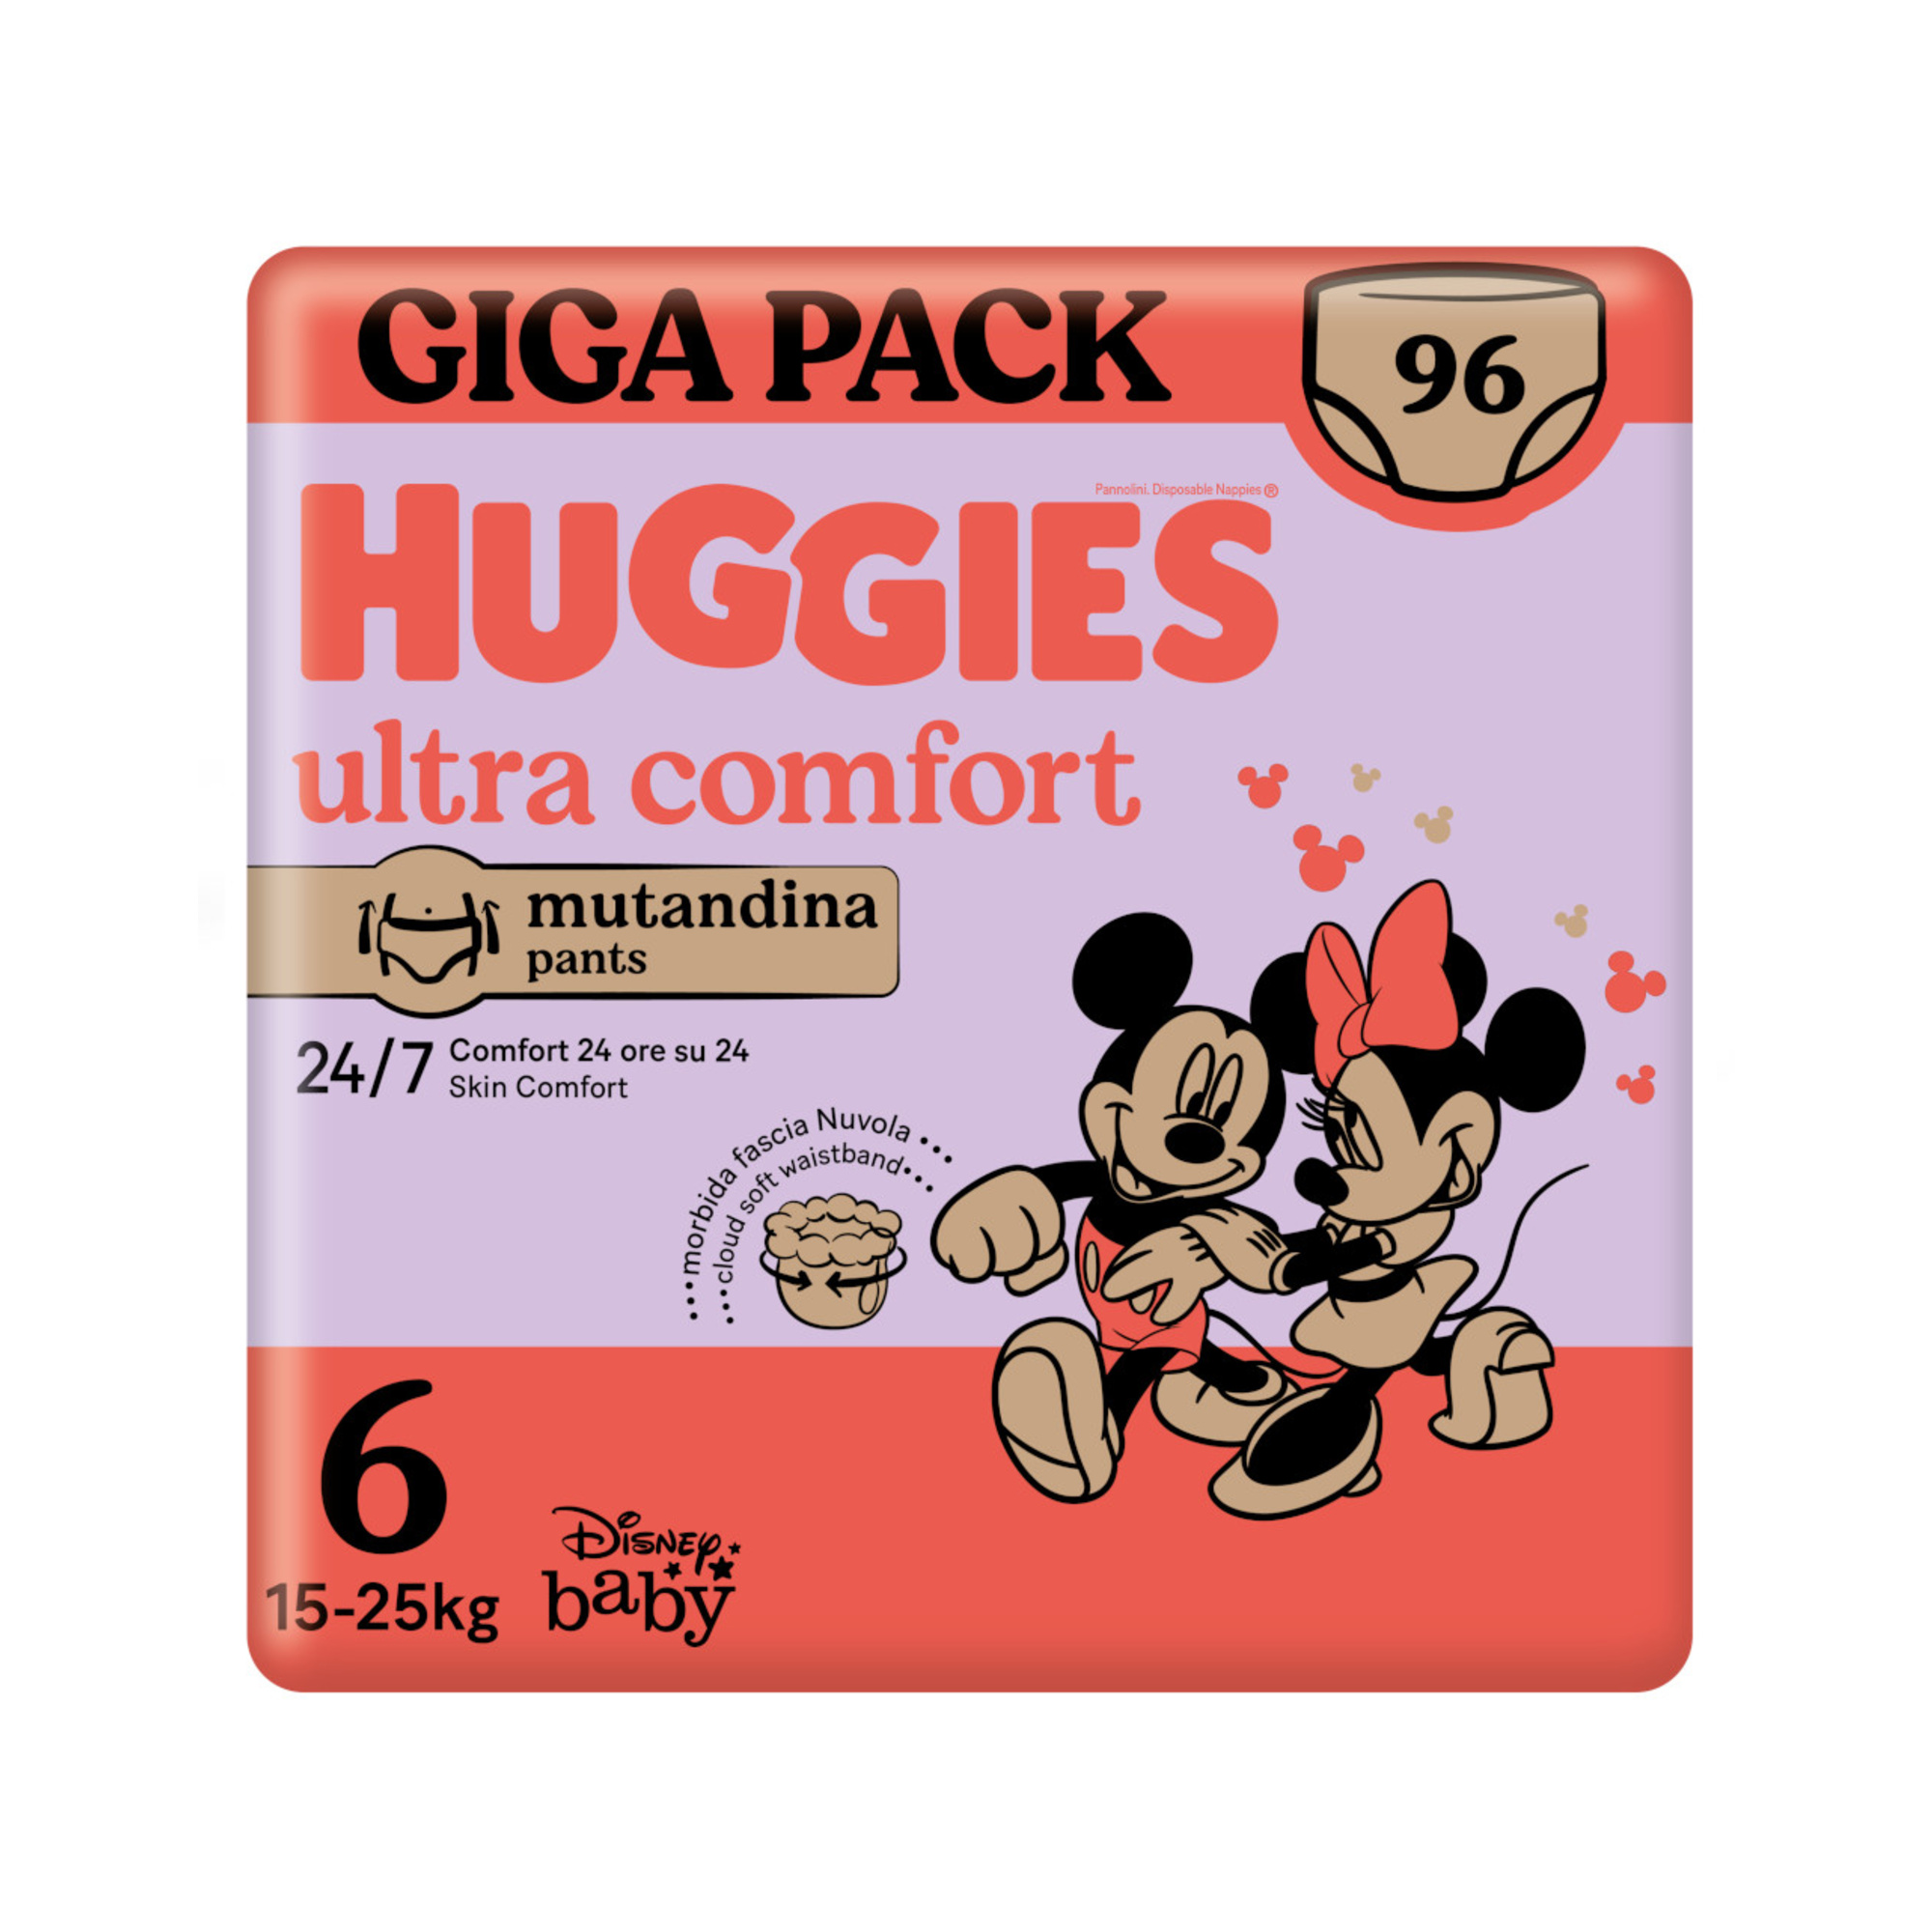 Mutandina gigapack tg.6 96 pannolini - huggies ultra comfort - Huggies